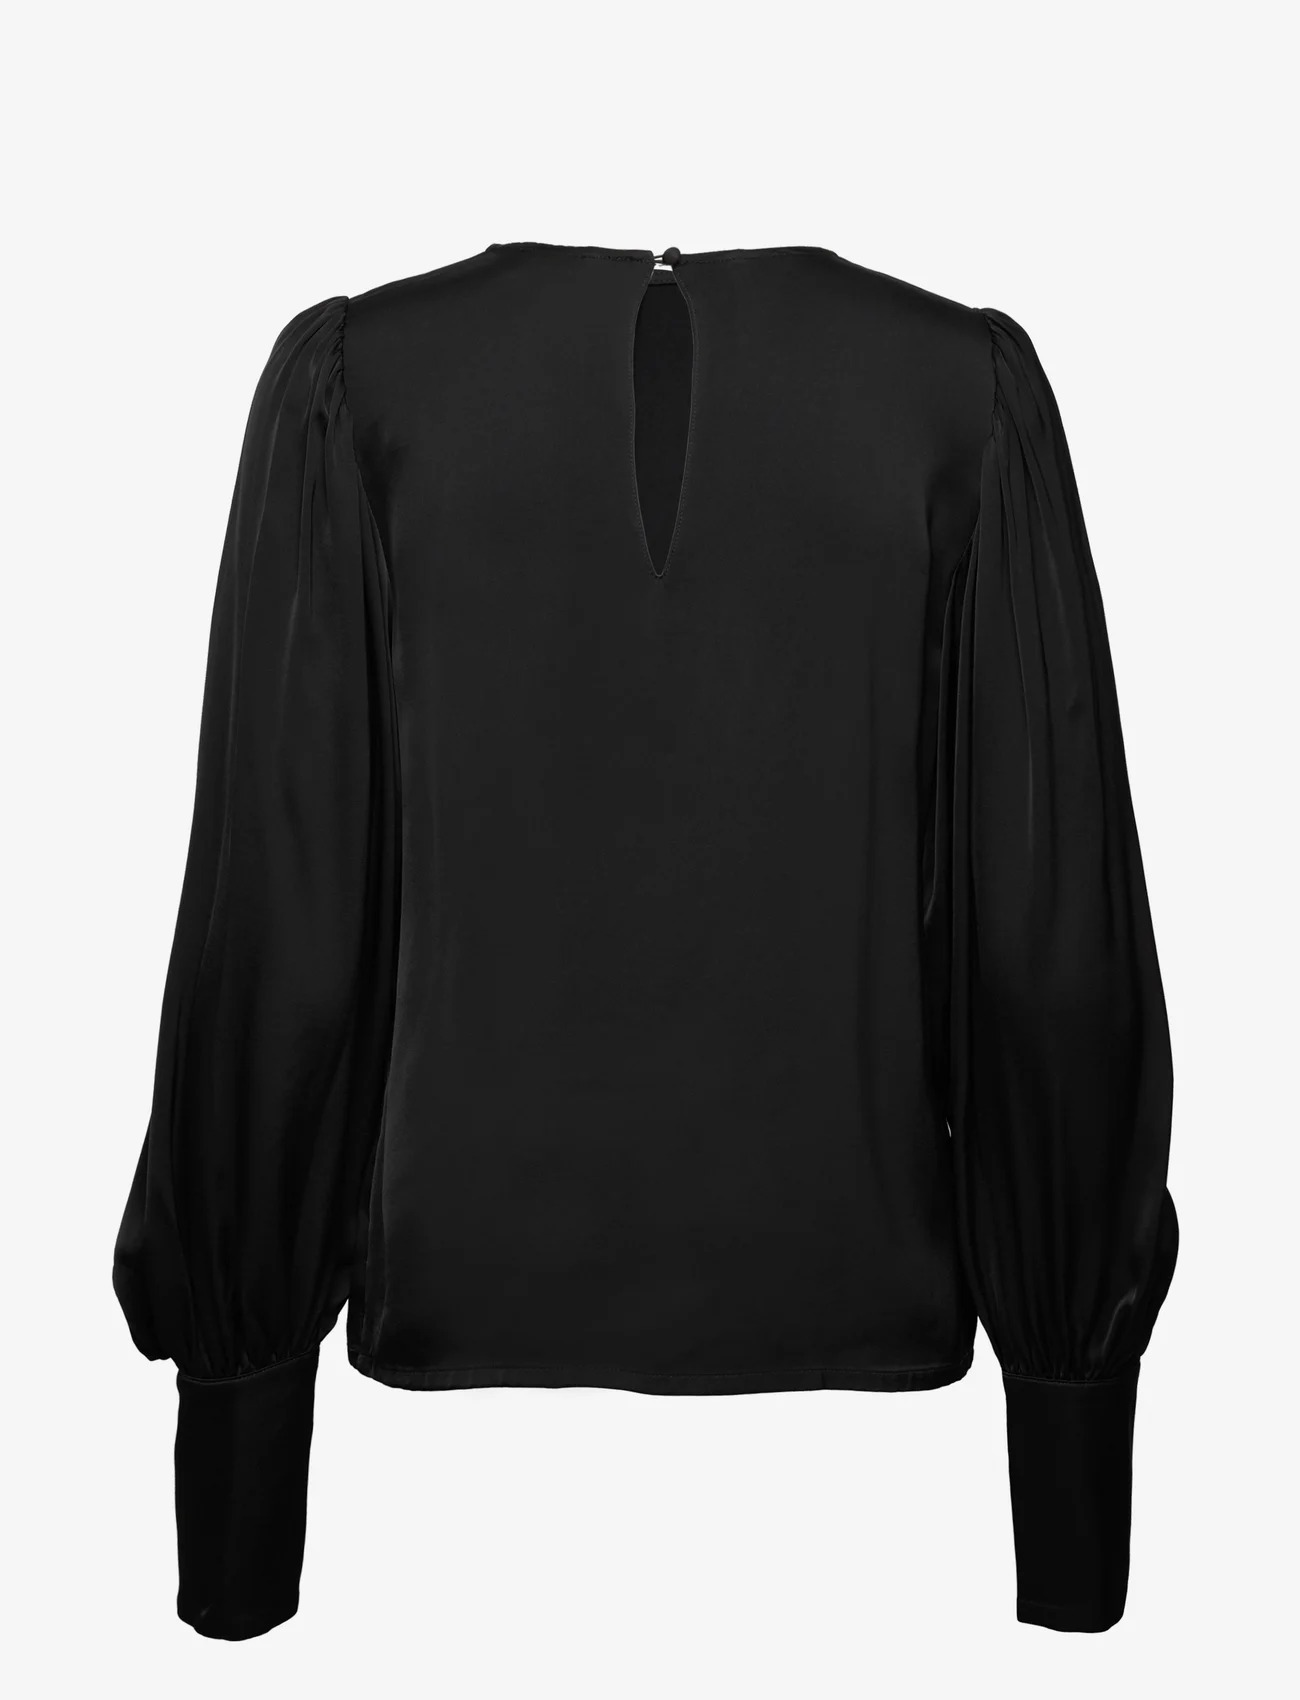 Malina - Rina balloon sleeve blouse - langermede bluser - black - 1